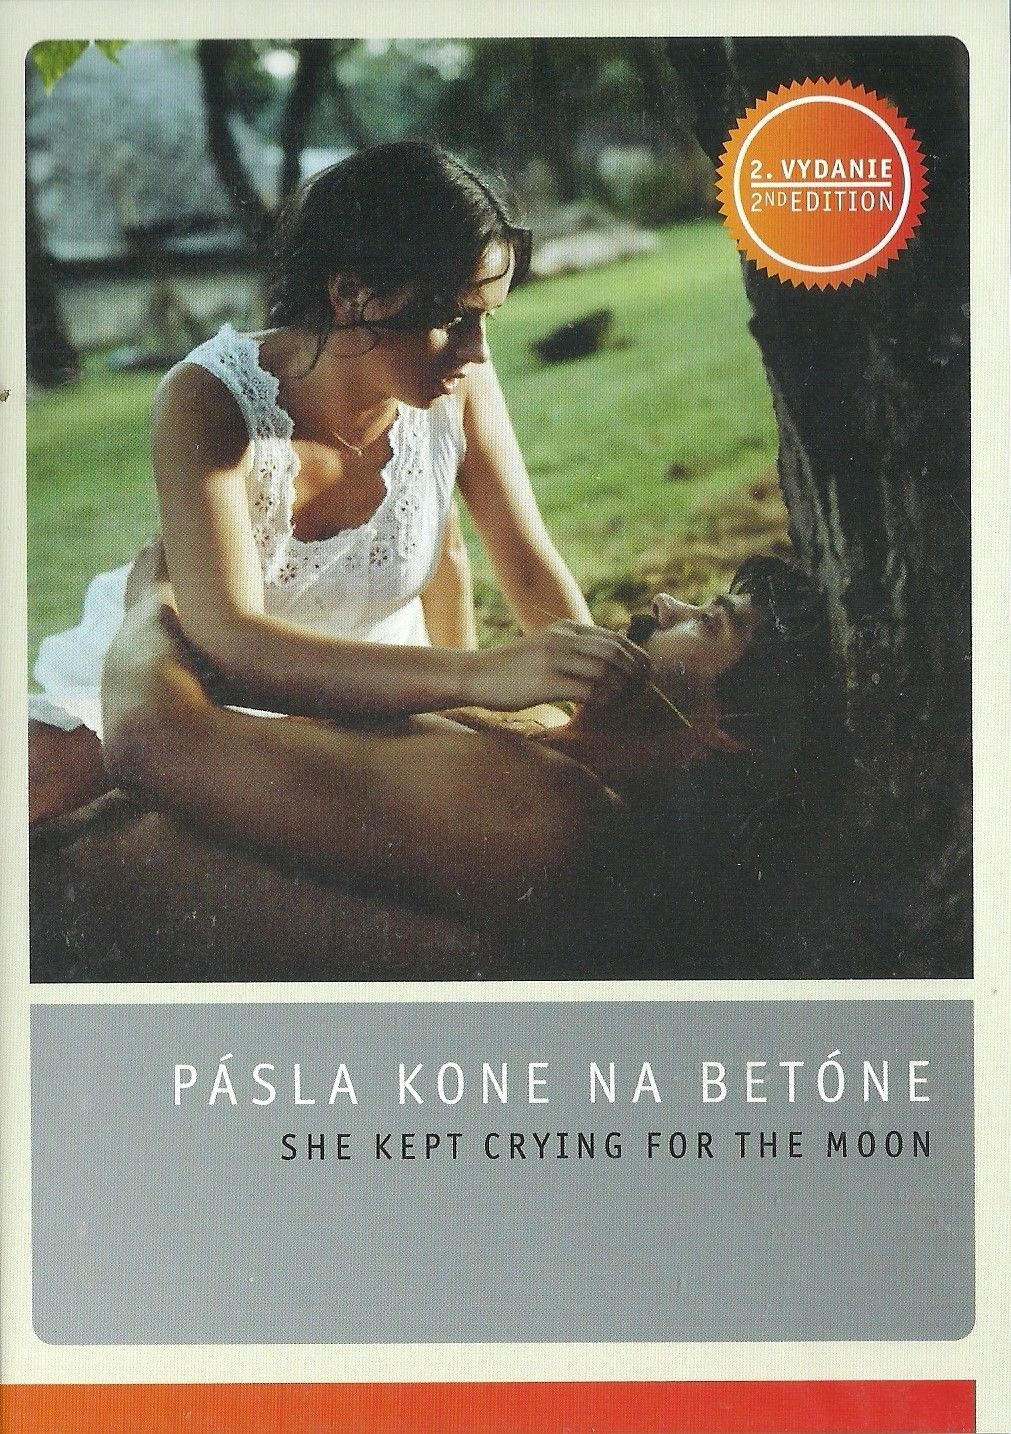 She Kept Crying for the Moon / Pasla kone na betone DVD